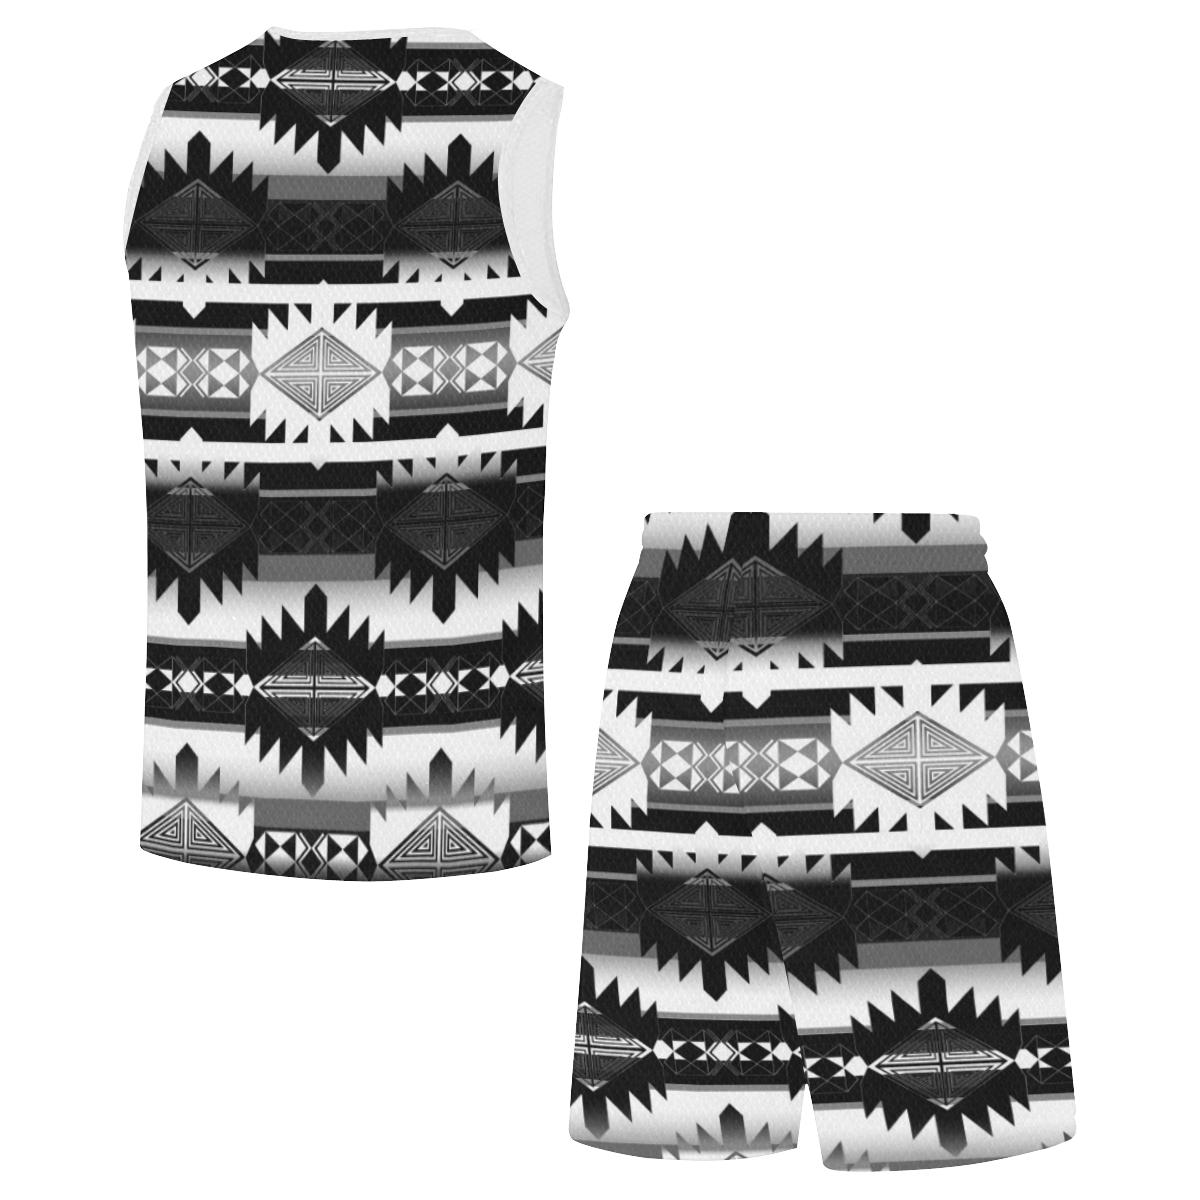 Okotoks Black and White All Over Print Basketball Uniform Basketball Uniform e-joyer 